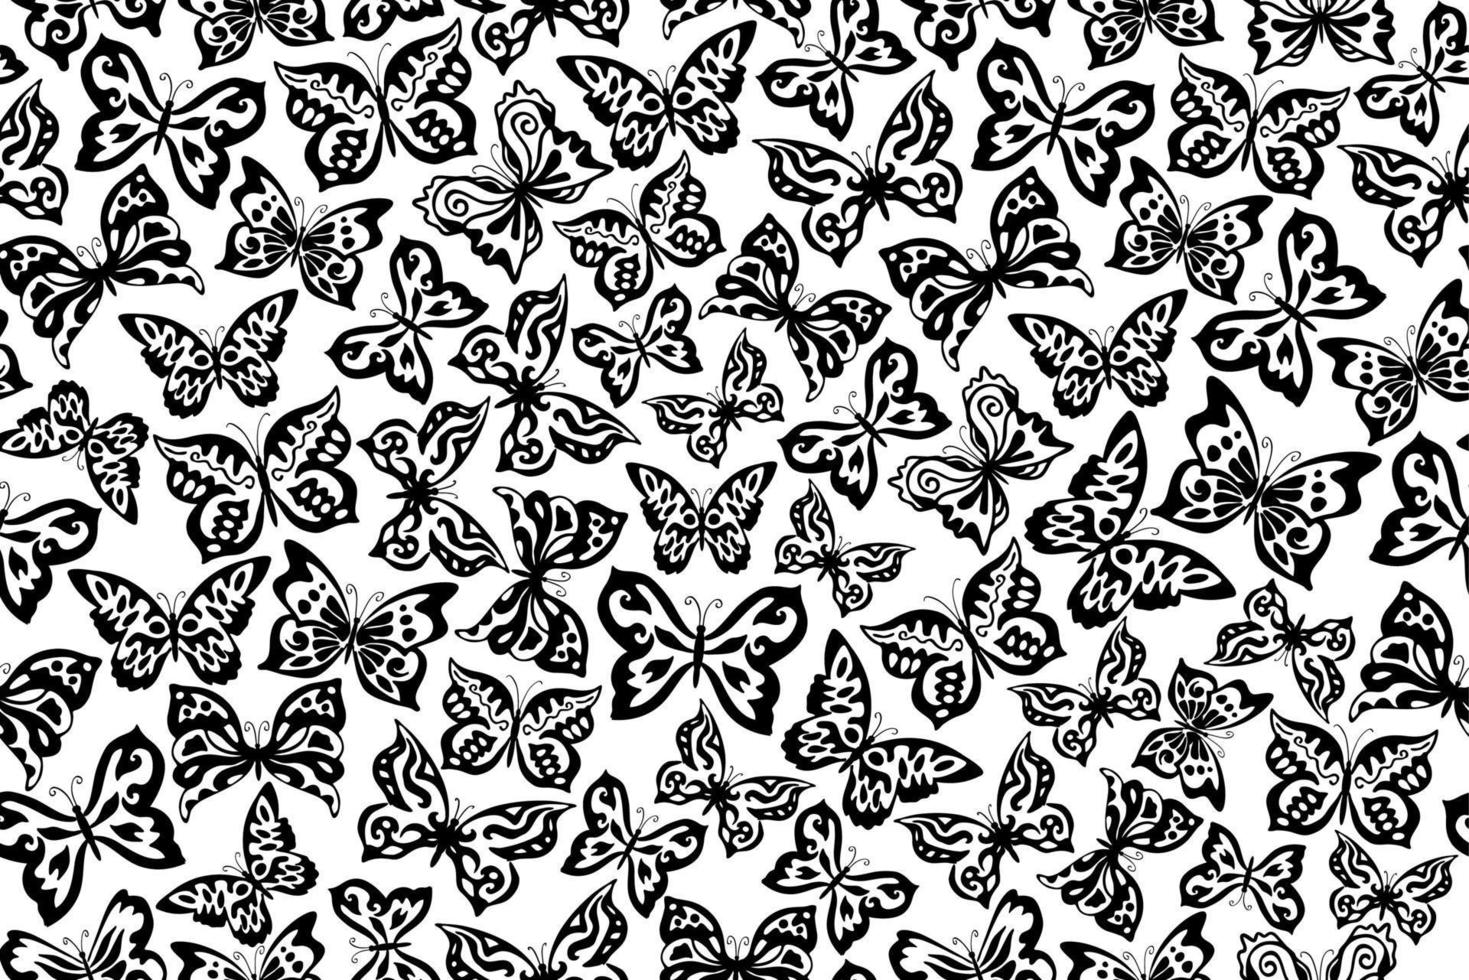 Vektor nahtlose Muster. Schwarzweiss-Schmetterlinge, die Muster wiederholen, verziertes Schmetterlingsmuster.